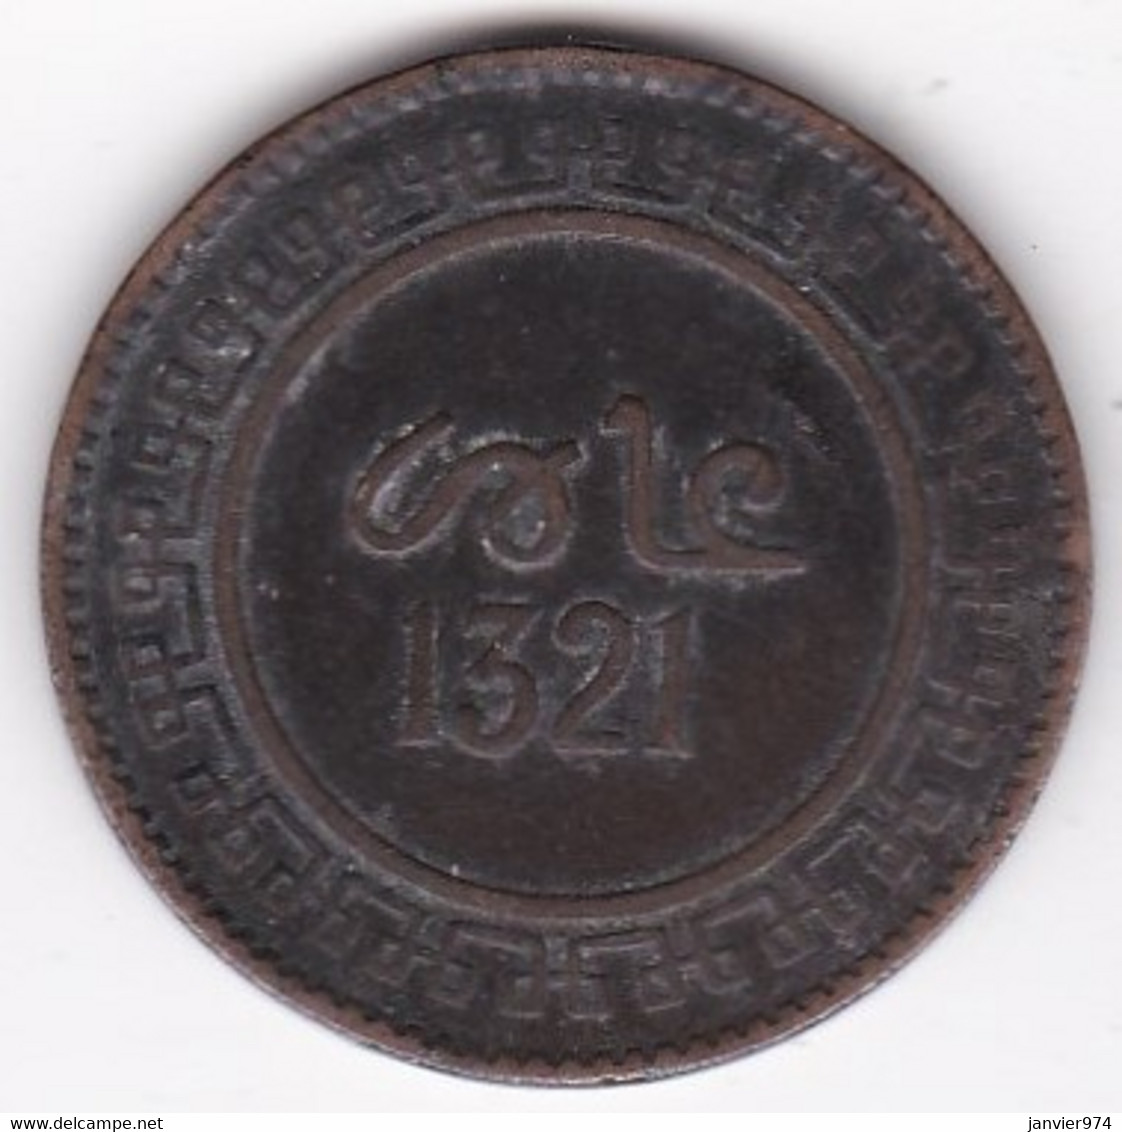 Protectorat Français 10 Mouzounas HA 1321 - 1903 Birmingham. Frappe Médaille. Bronze , Lec# 87 - Marokko